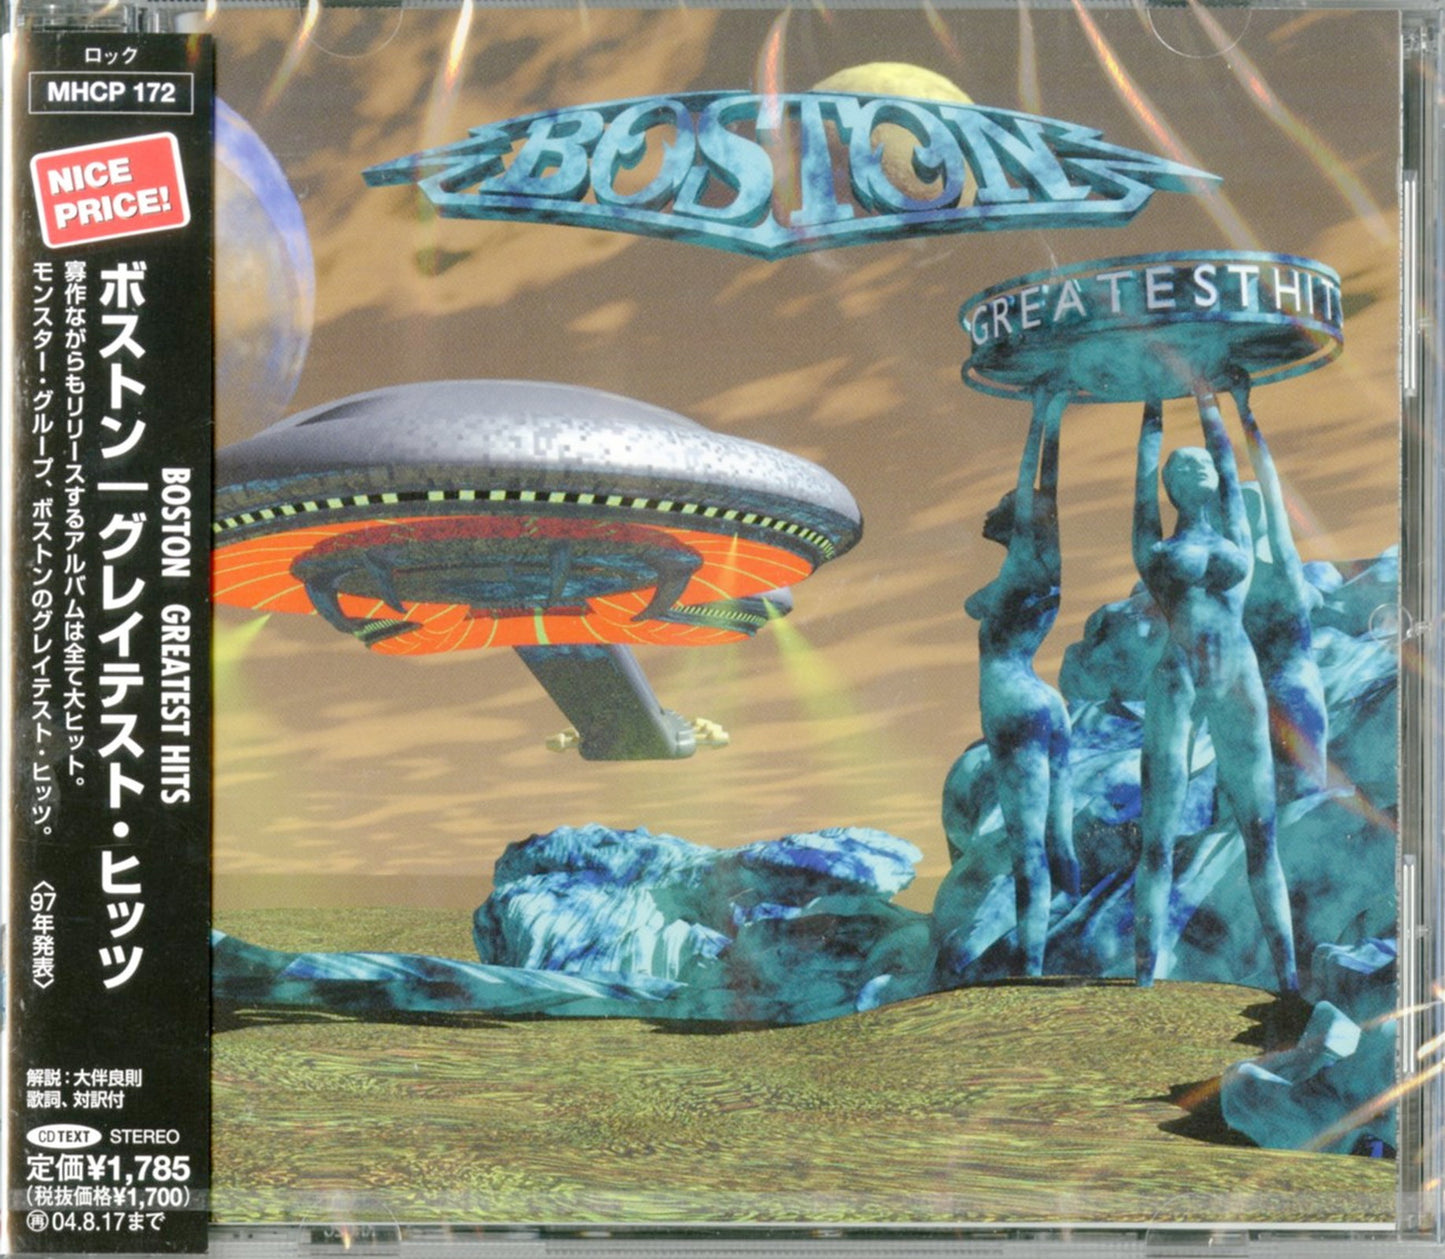 Boston - Greatest Hits - Japan CD